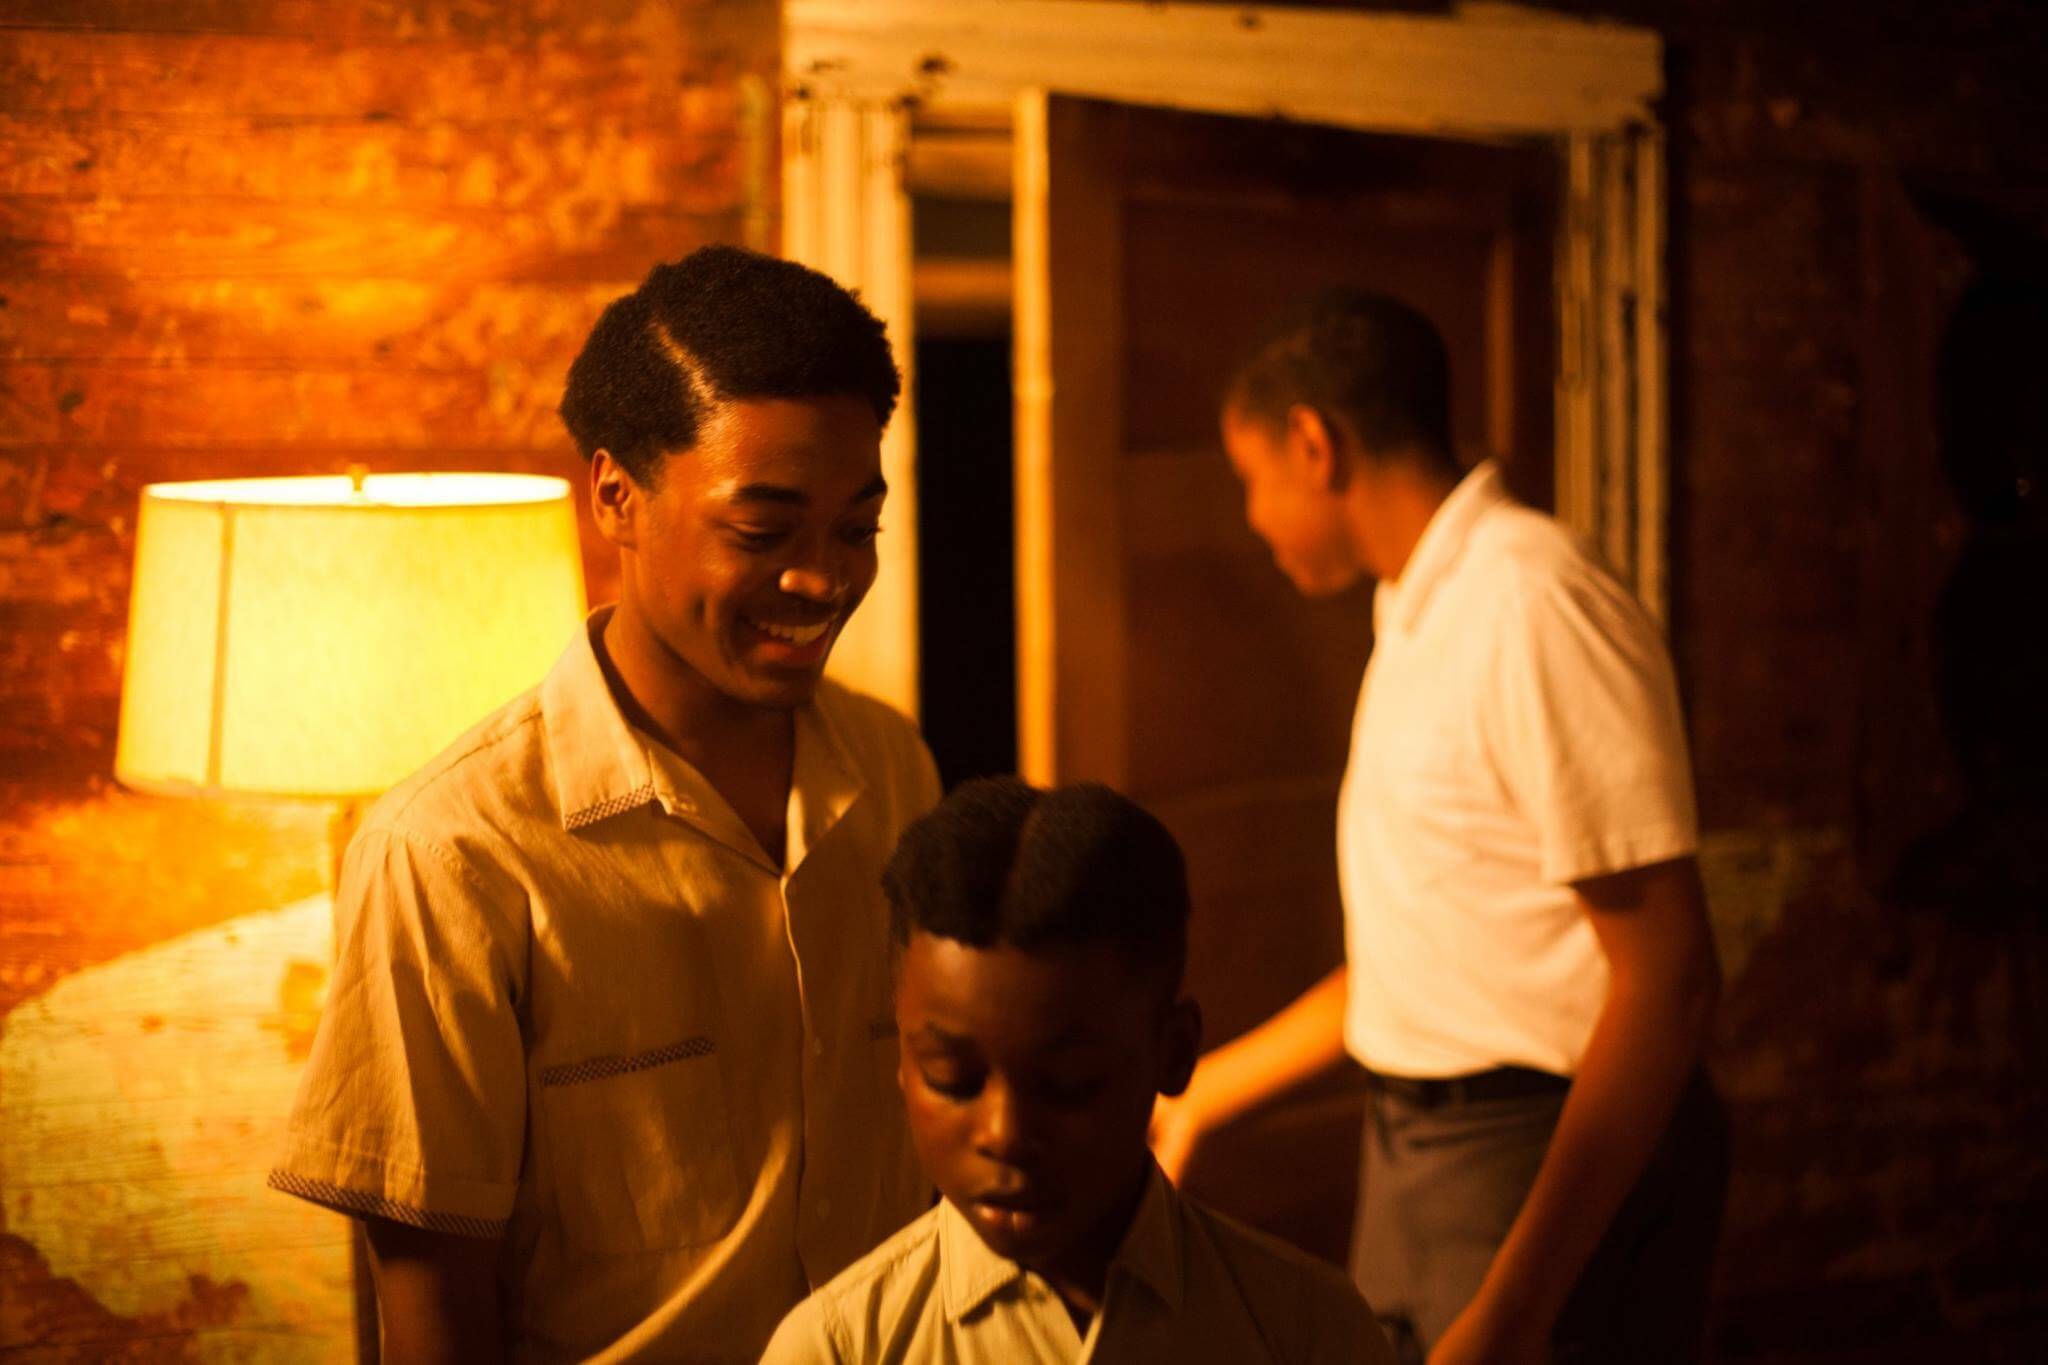 Dorian Davis ’20 in Oscar-nominated short film “My Nephew Emmett” Shenandoah Musical Theatre Student Attends the Oscars